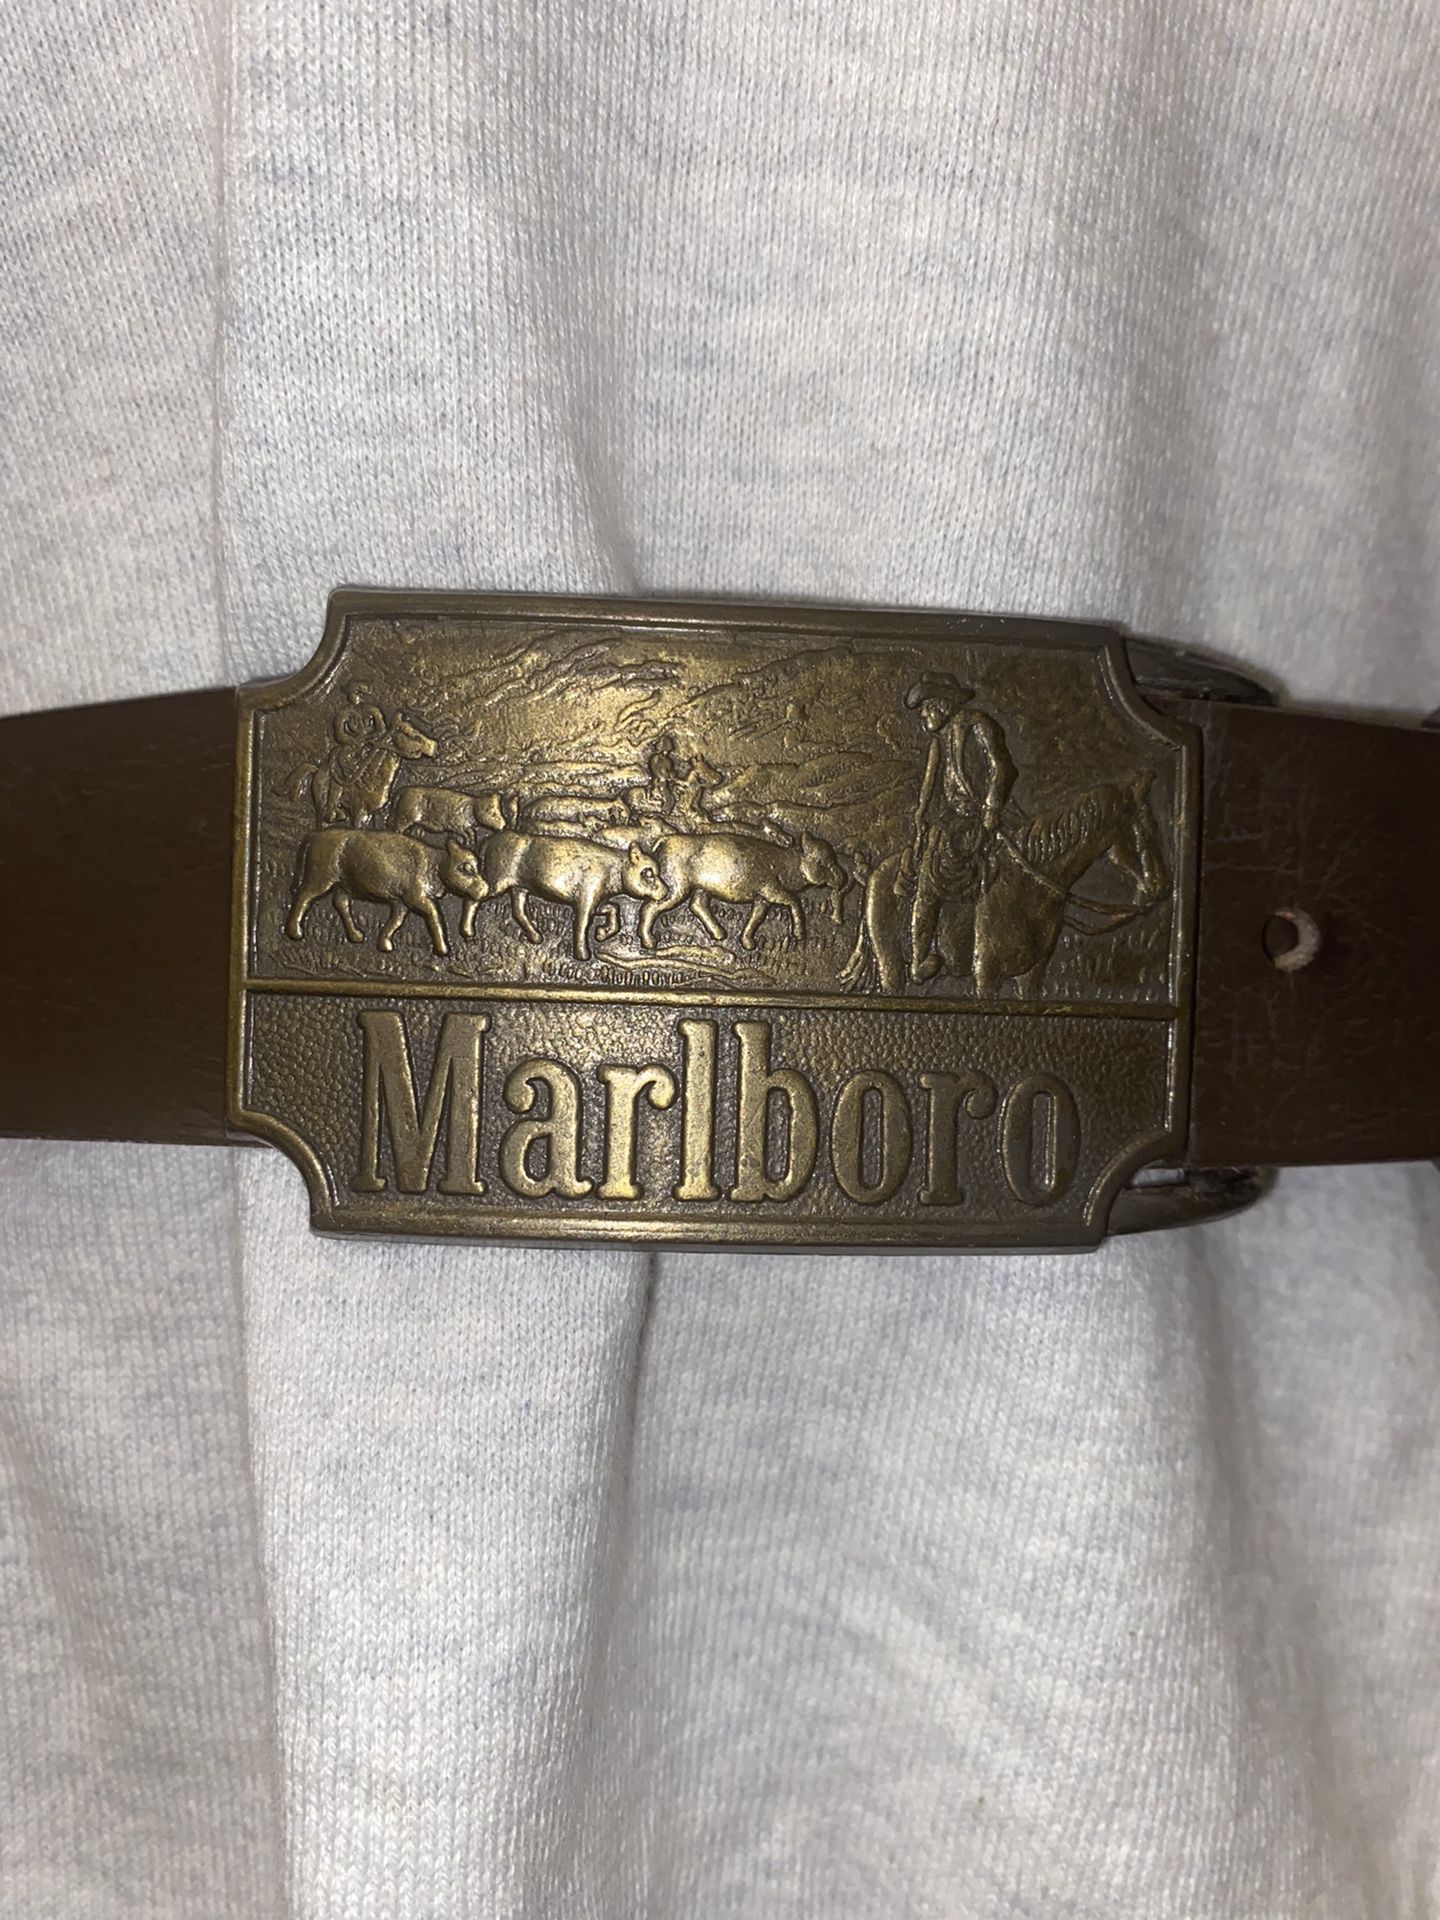 Marlboro Belt Buckle w/ Leather Belt